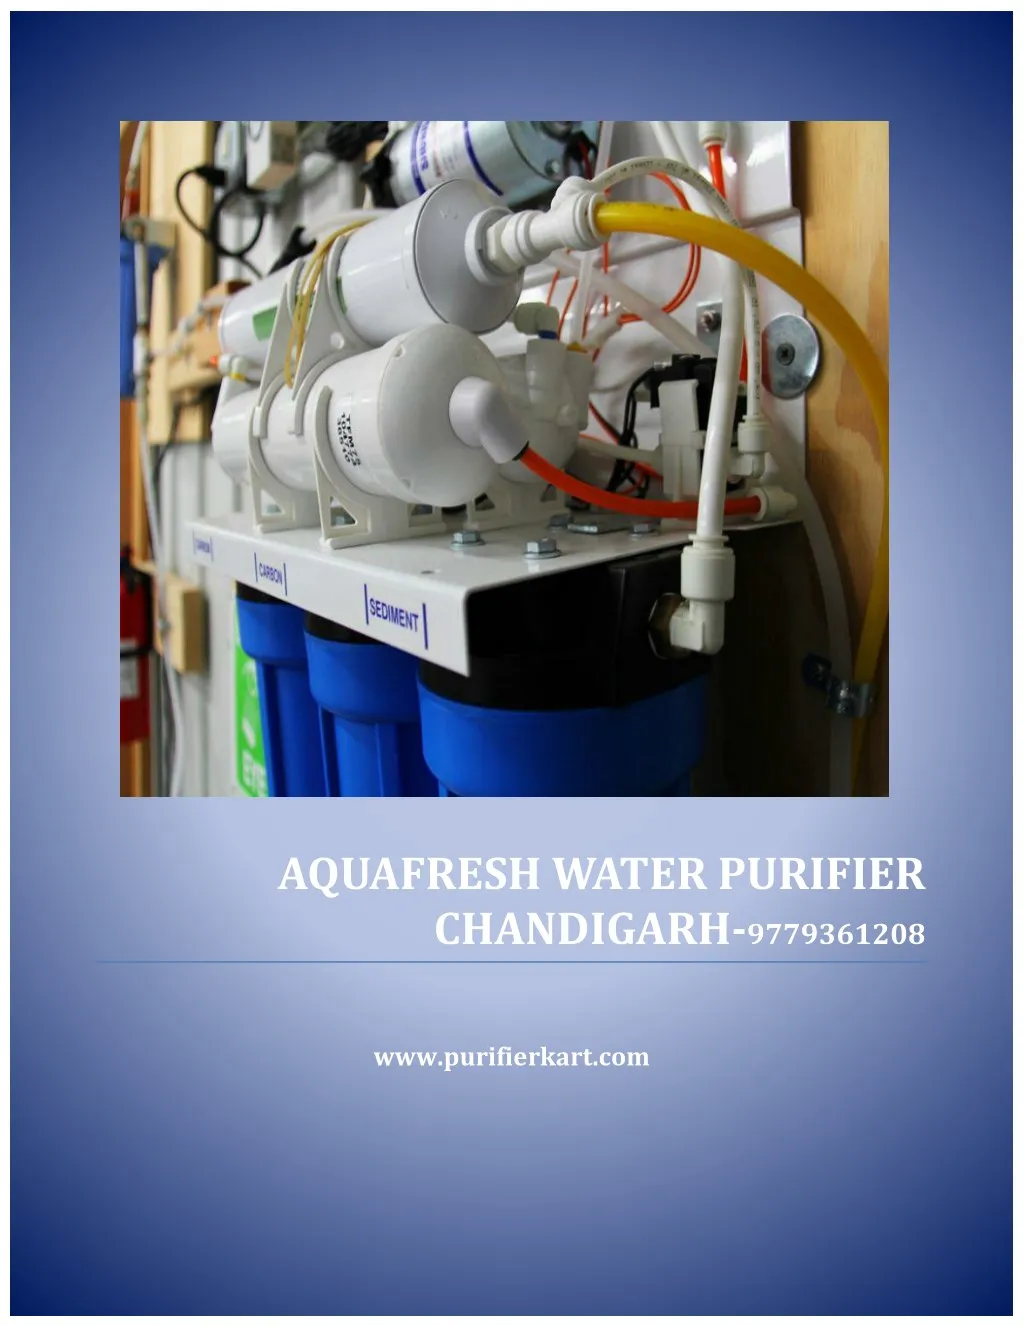 aquafresh water purifier chandigarh 9779361208